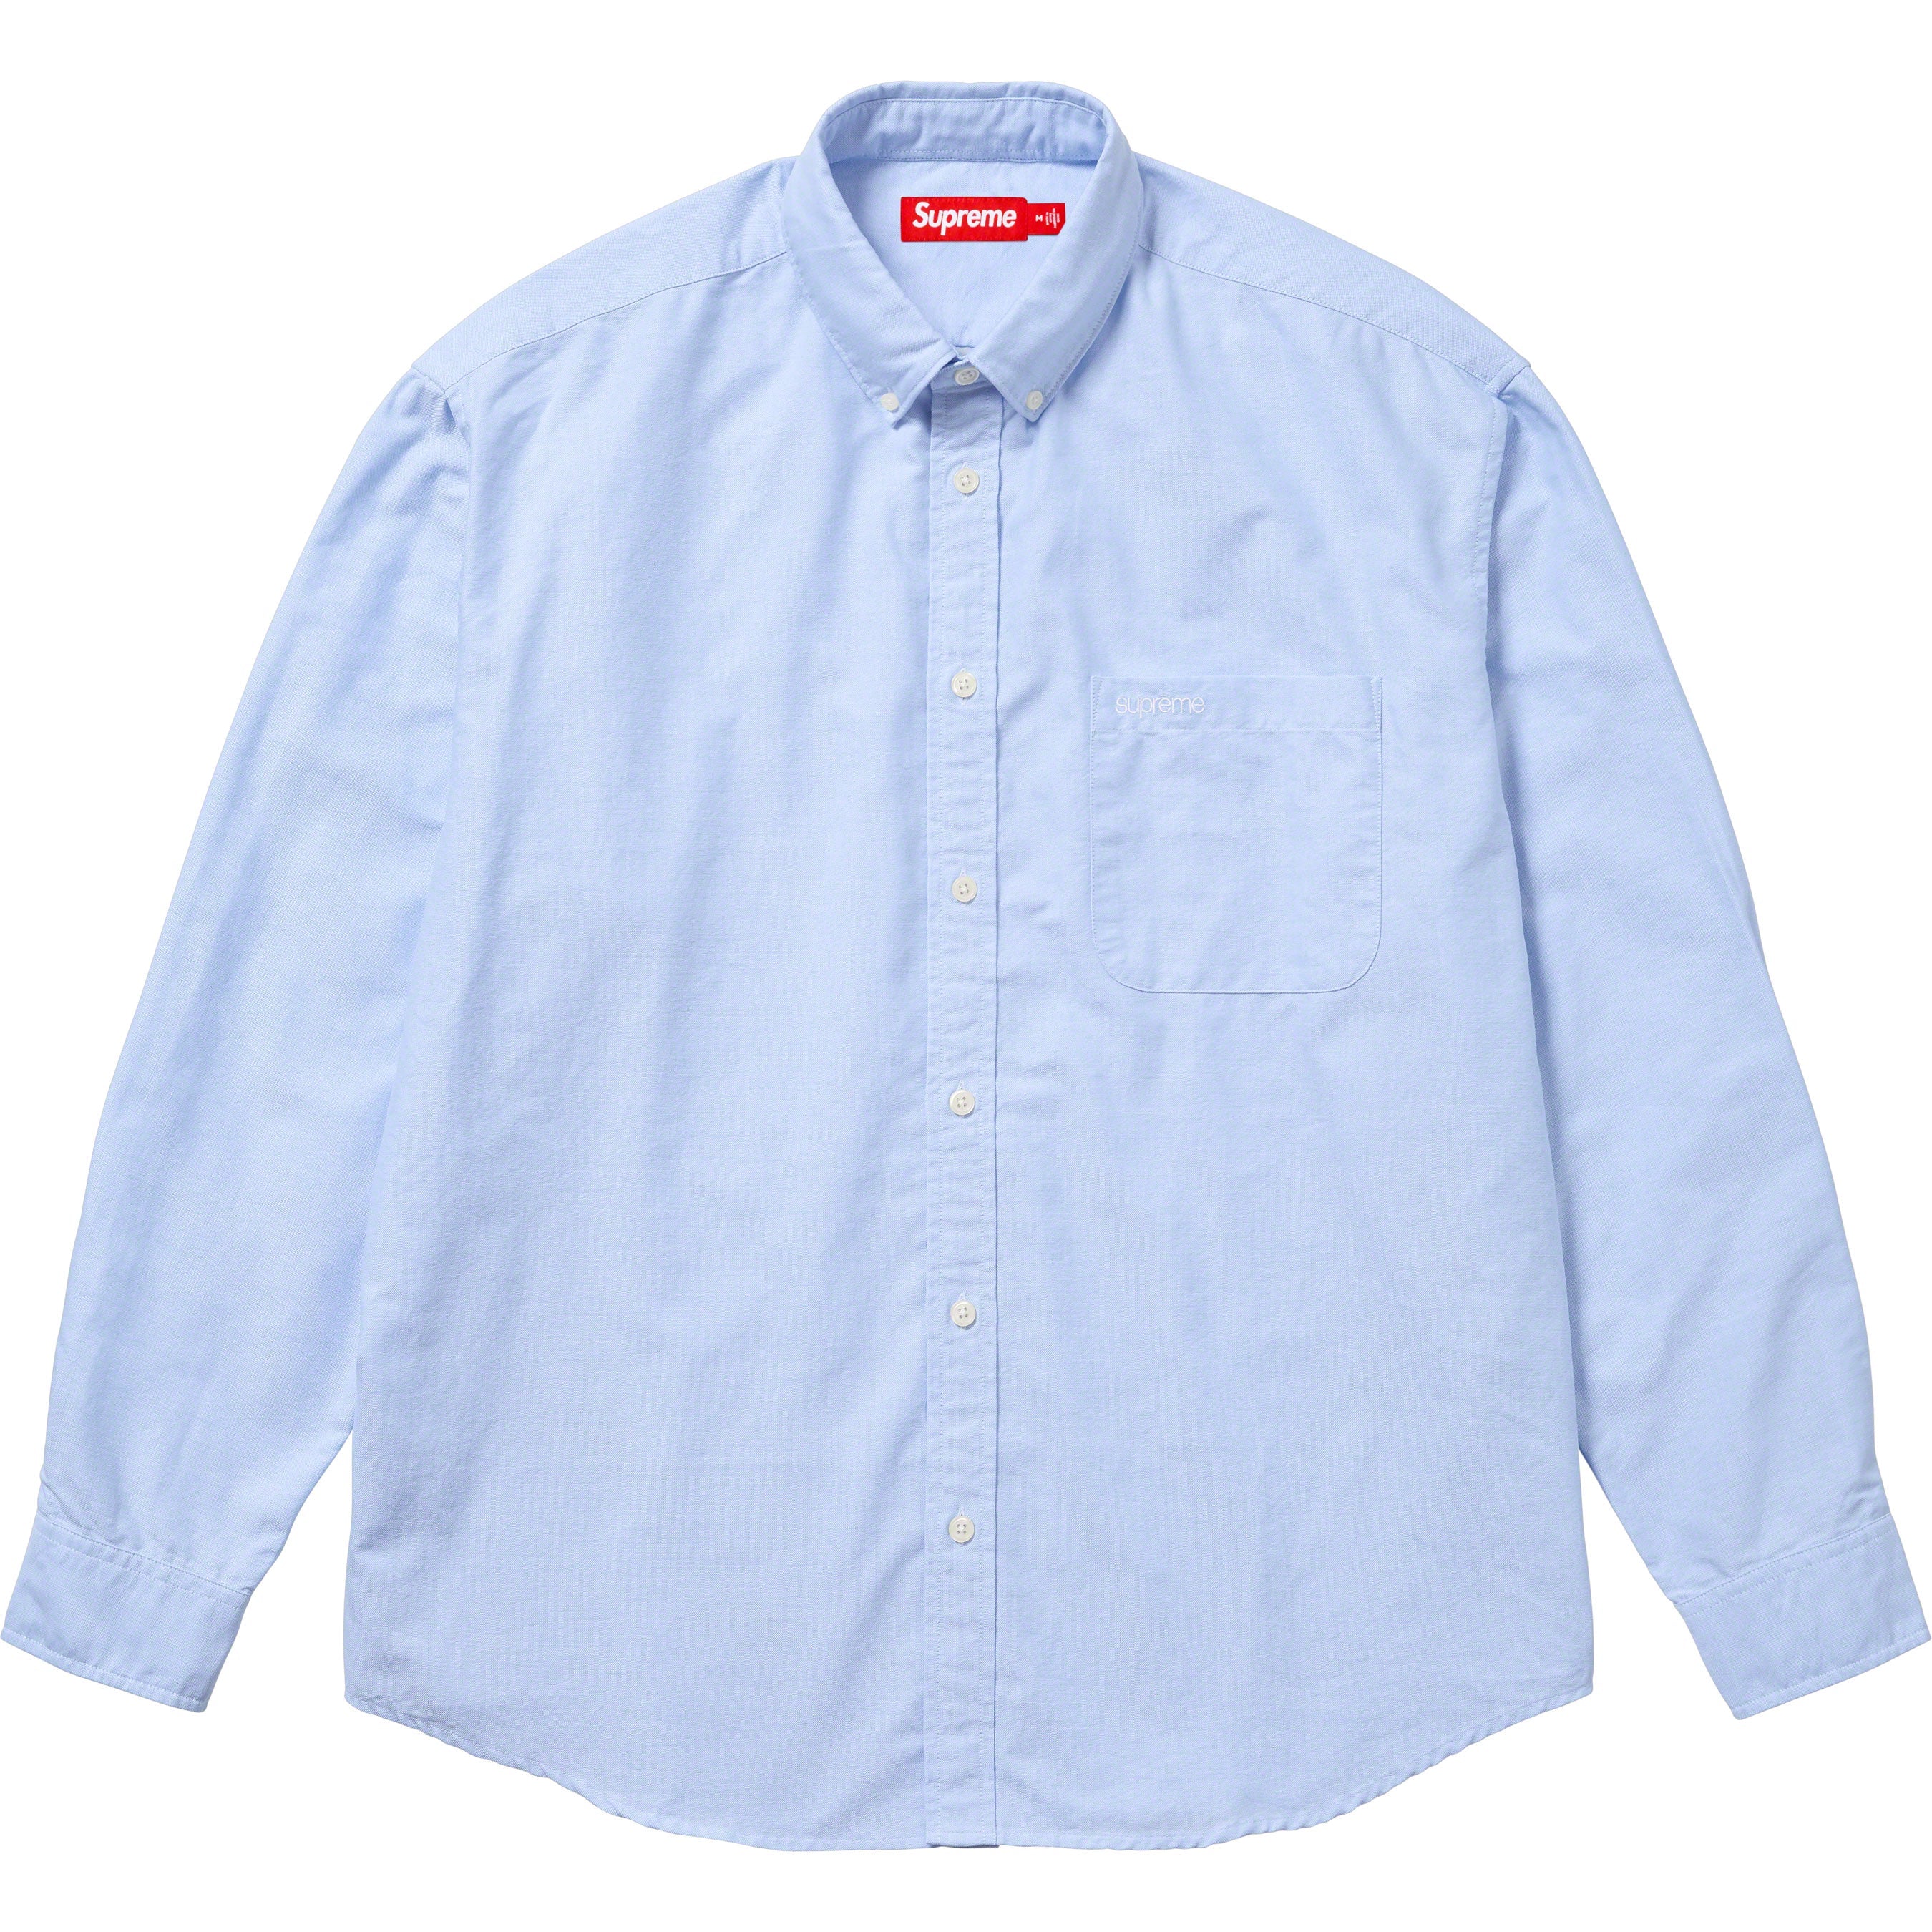 Supreme Patchwork Oxford Shirt - Farfetch